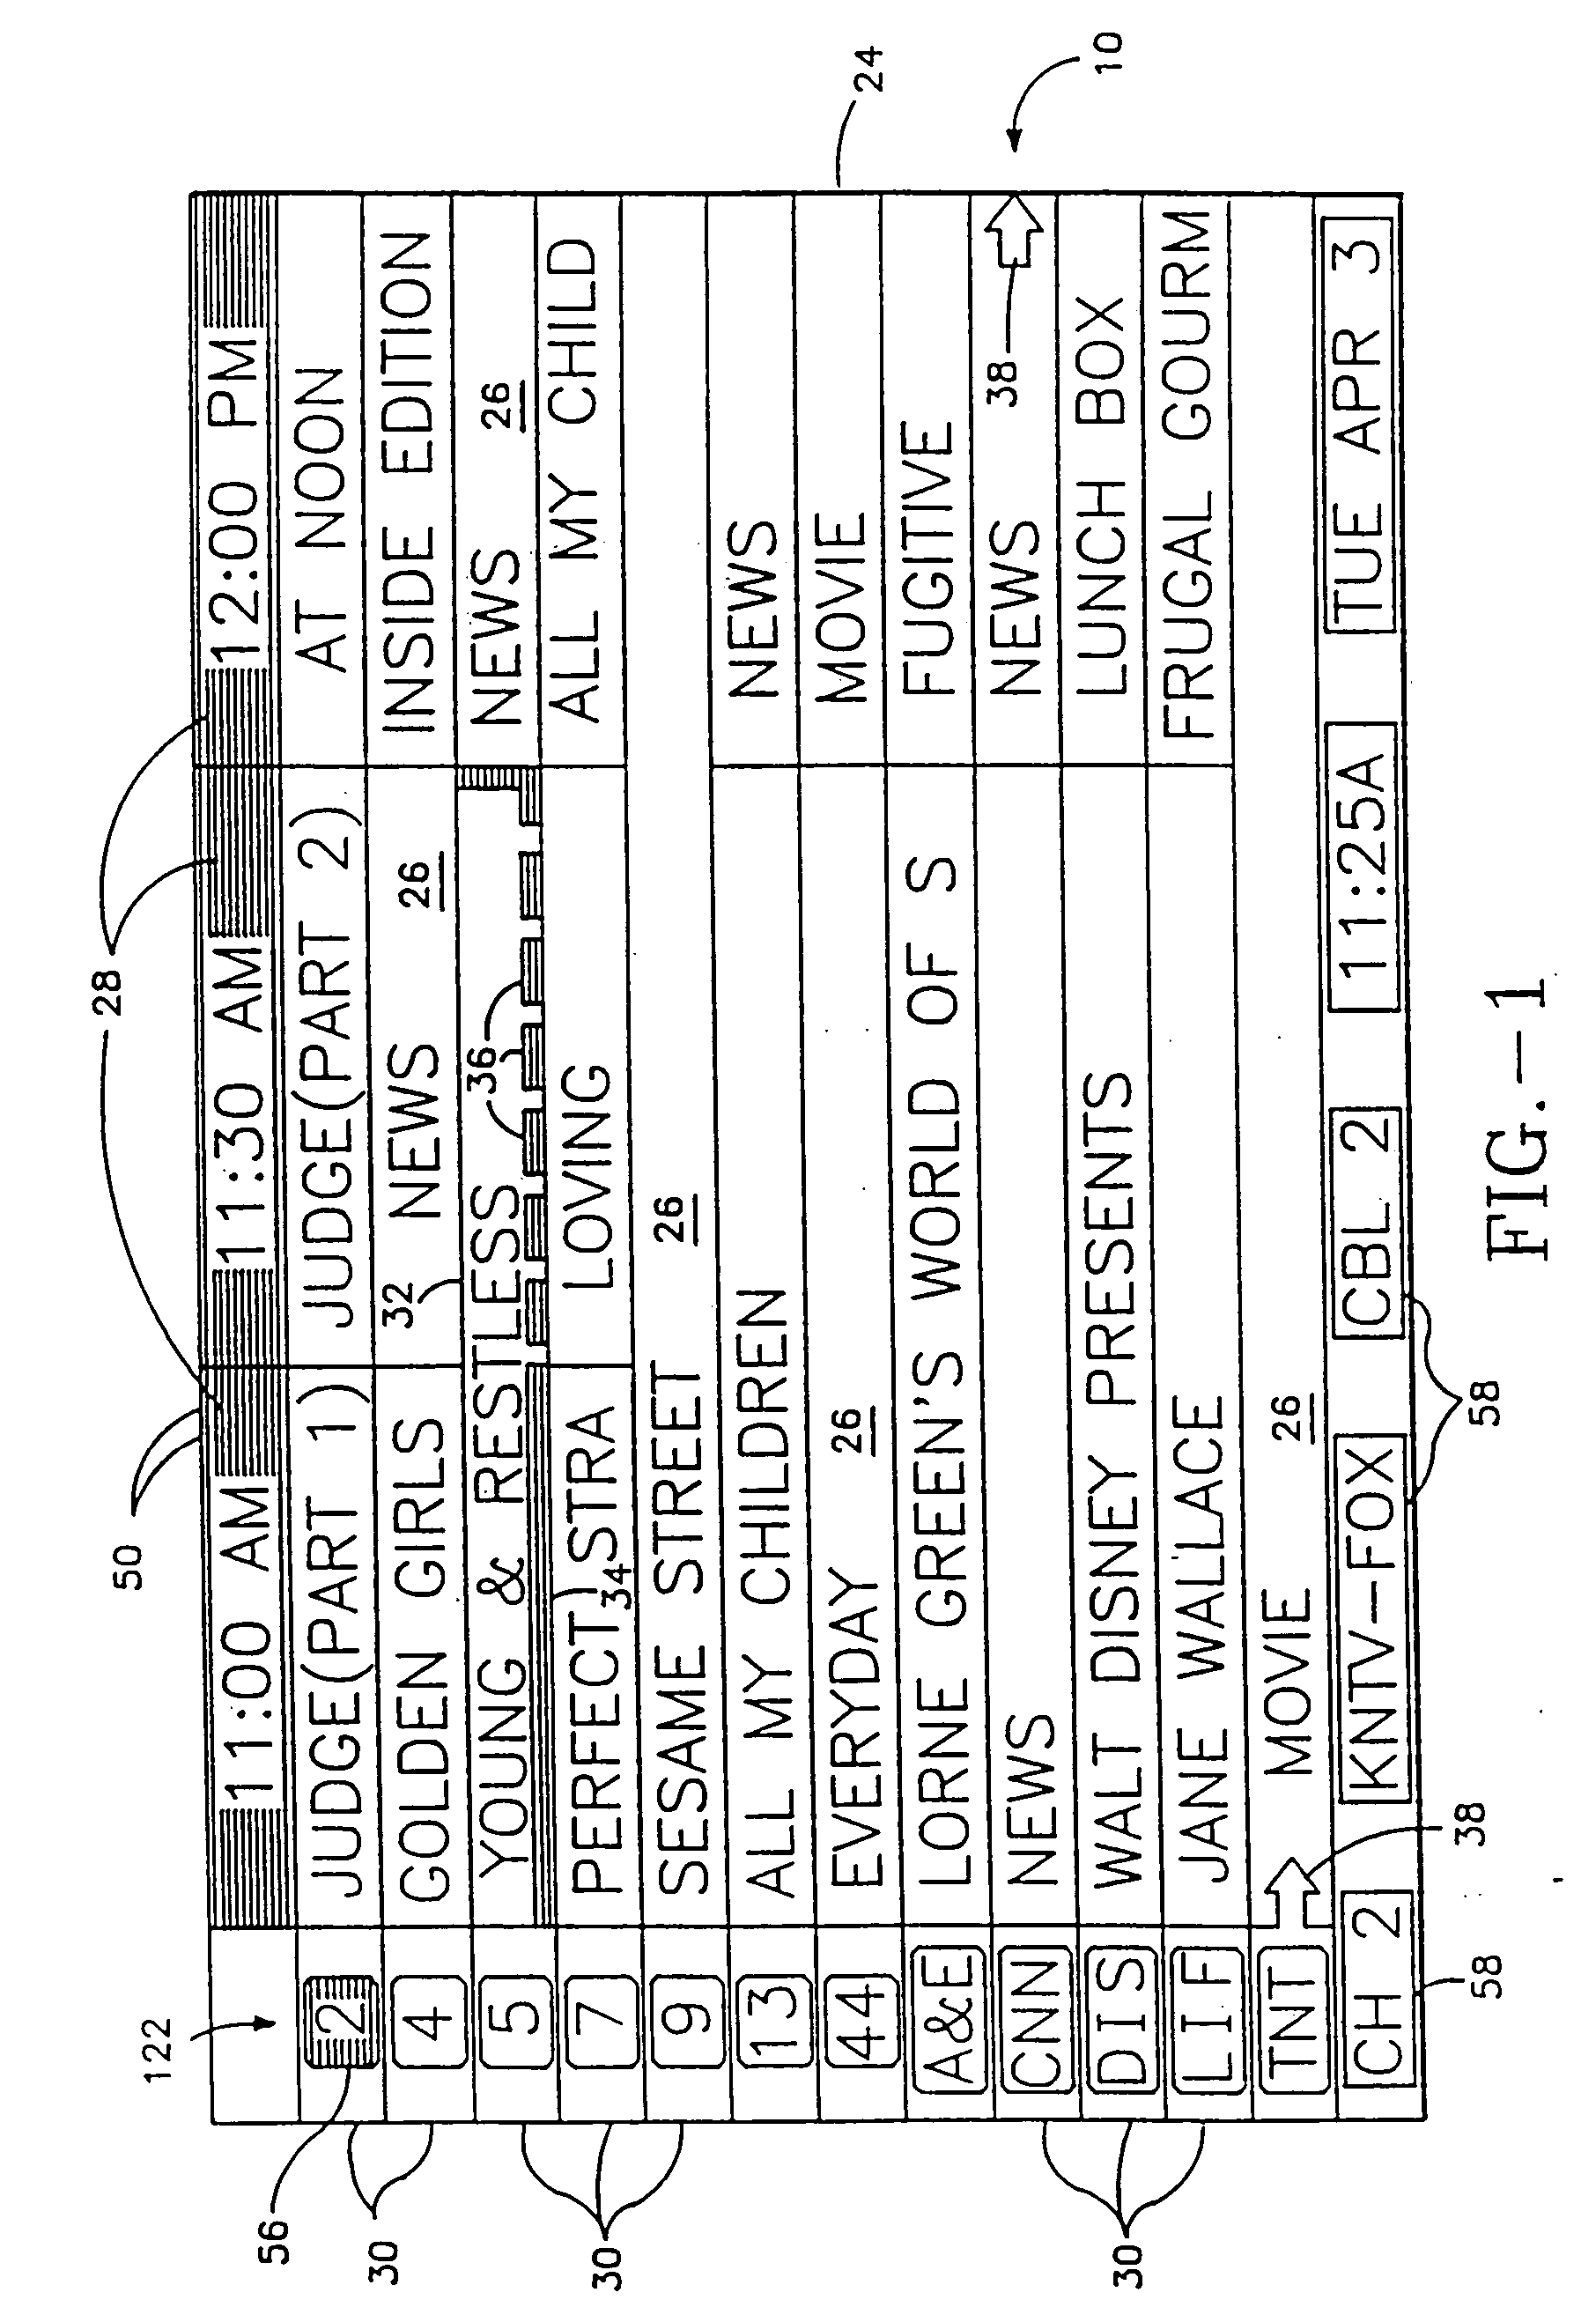 Television schedule system